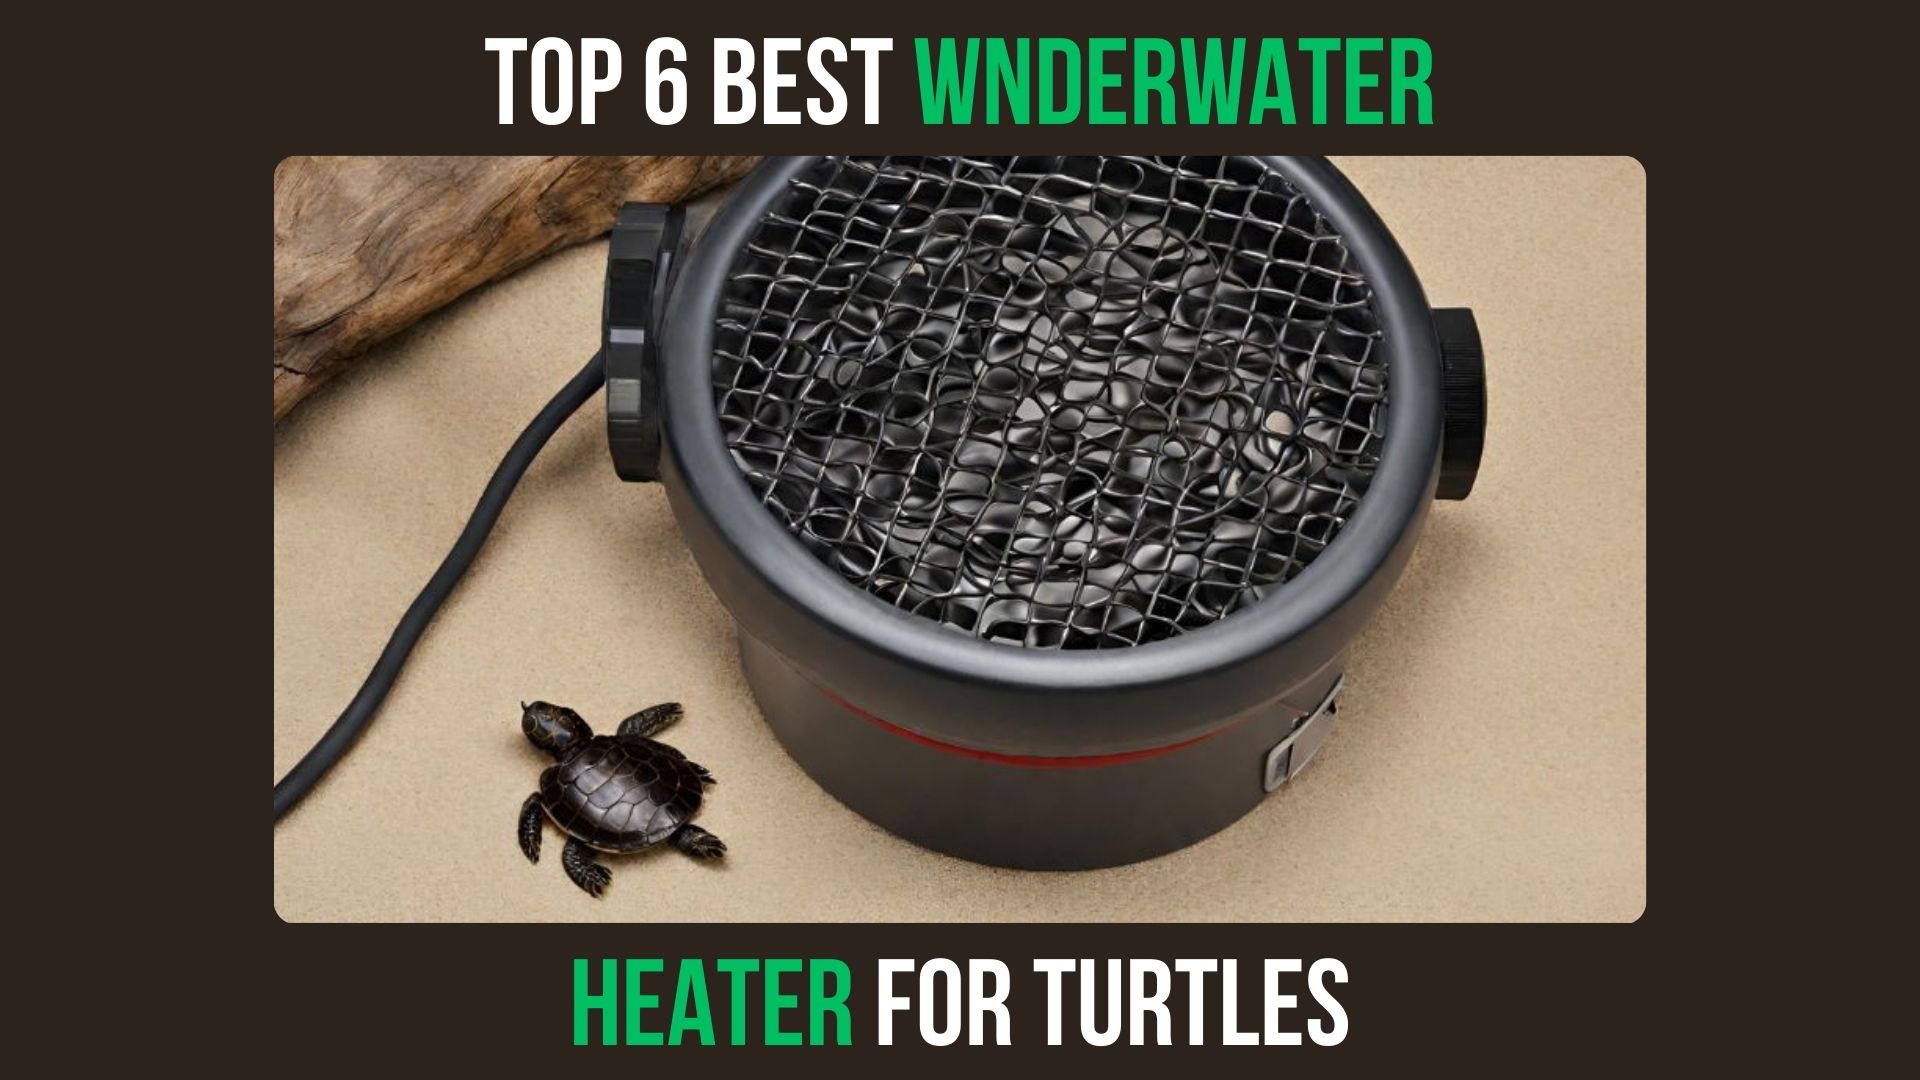 Top 6 Best Underwater Heater For Turtles